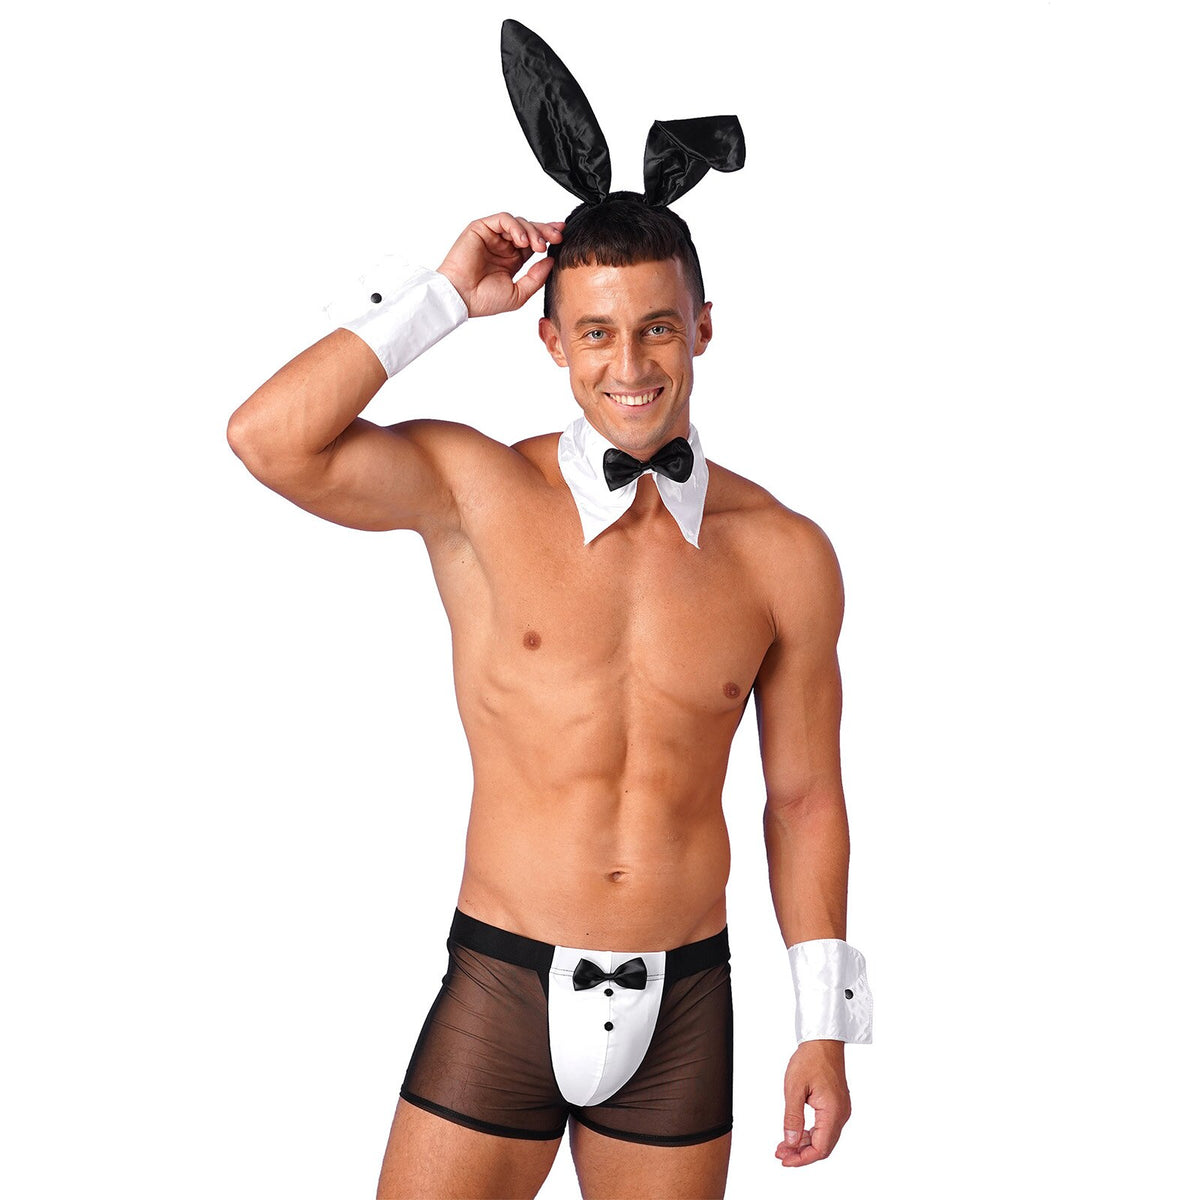 Men Waiter Tuxedo Lingerie Sexy Cosplay Costume Role Play Uniform See Through Briefs Underwear with Bunny Ears Headband Collar